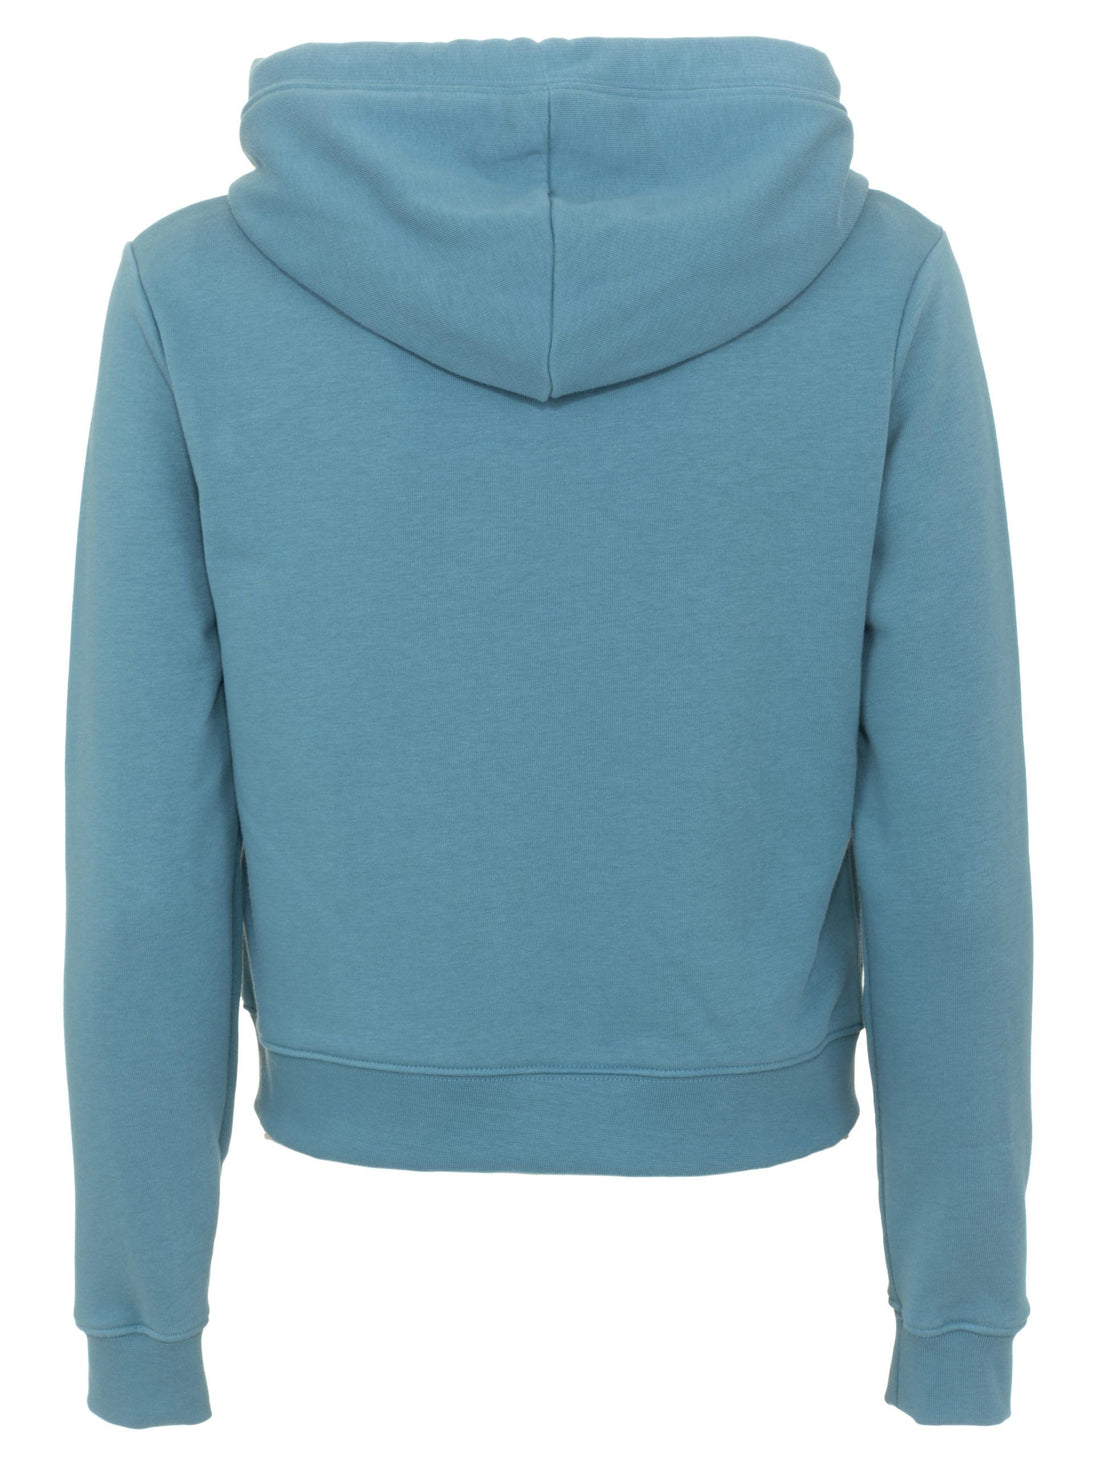 Imperfect Chic Light Blue Hooded Zip Sweatshirt